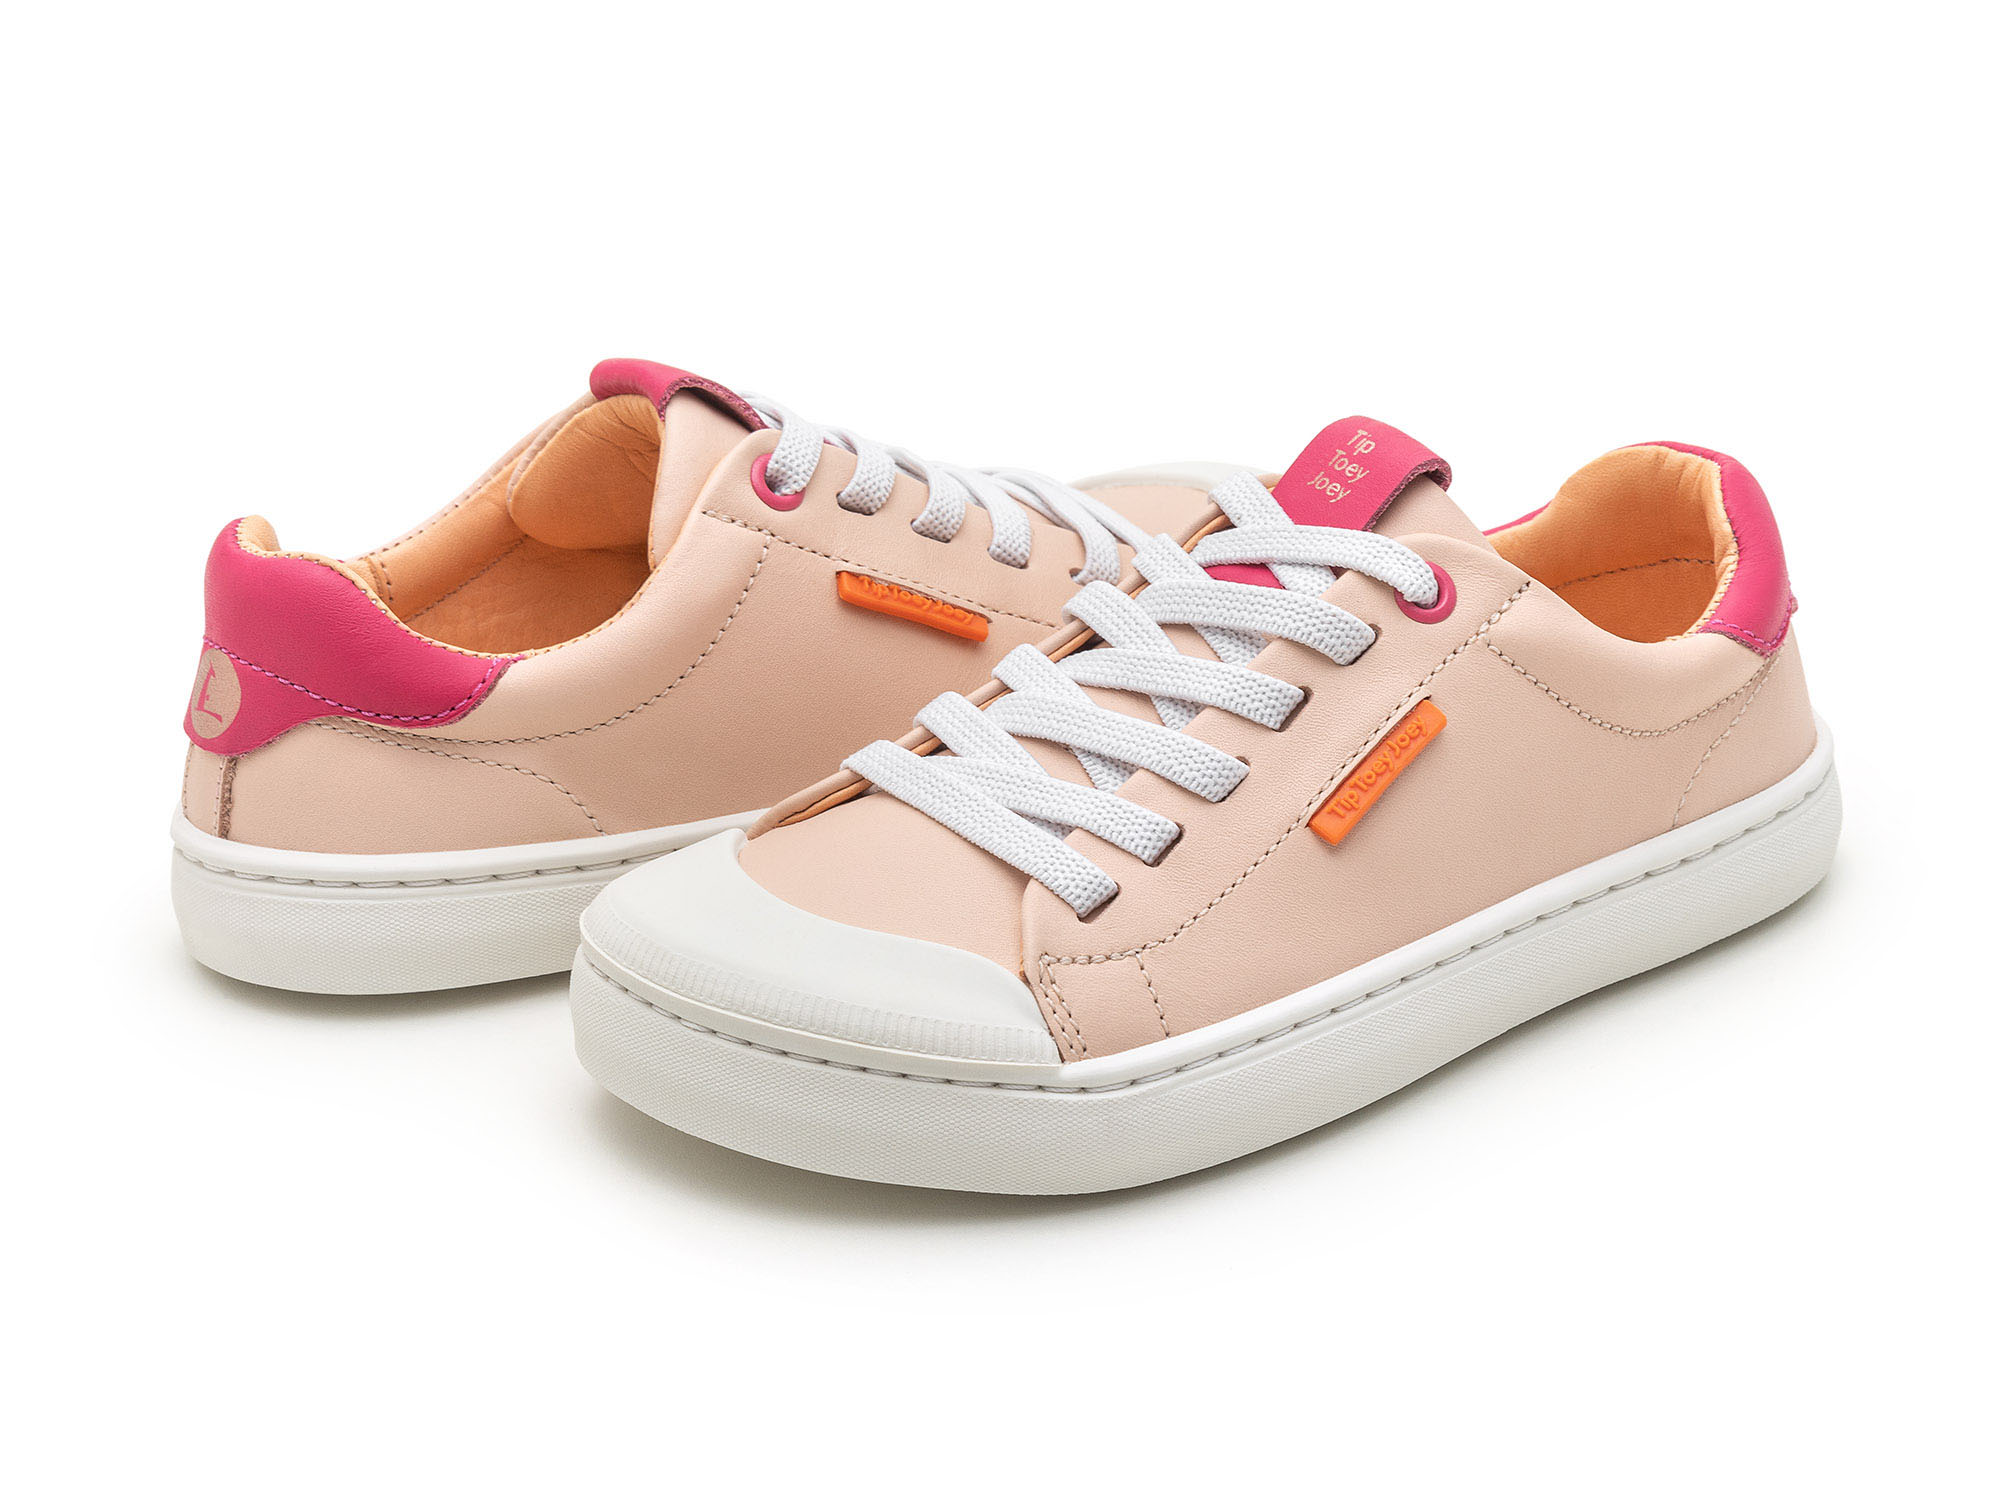 RUN & PLAY Sneakers for Girls Volt Colors | Tip Toey Joey - Australia - 4